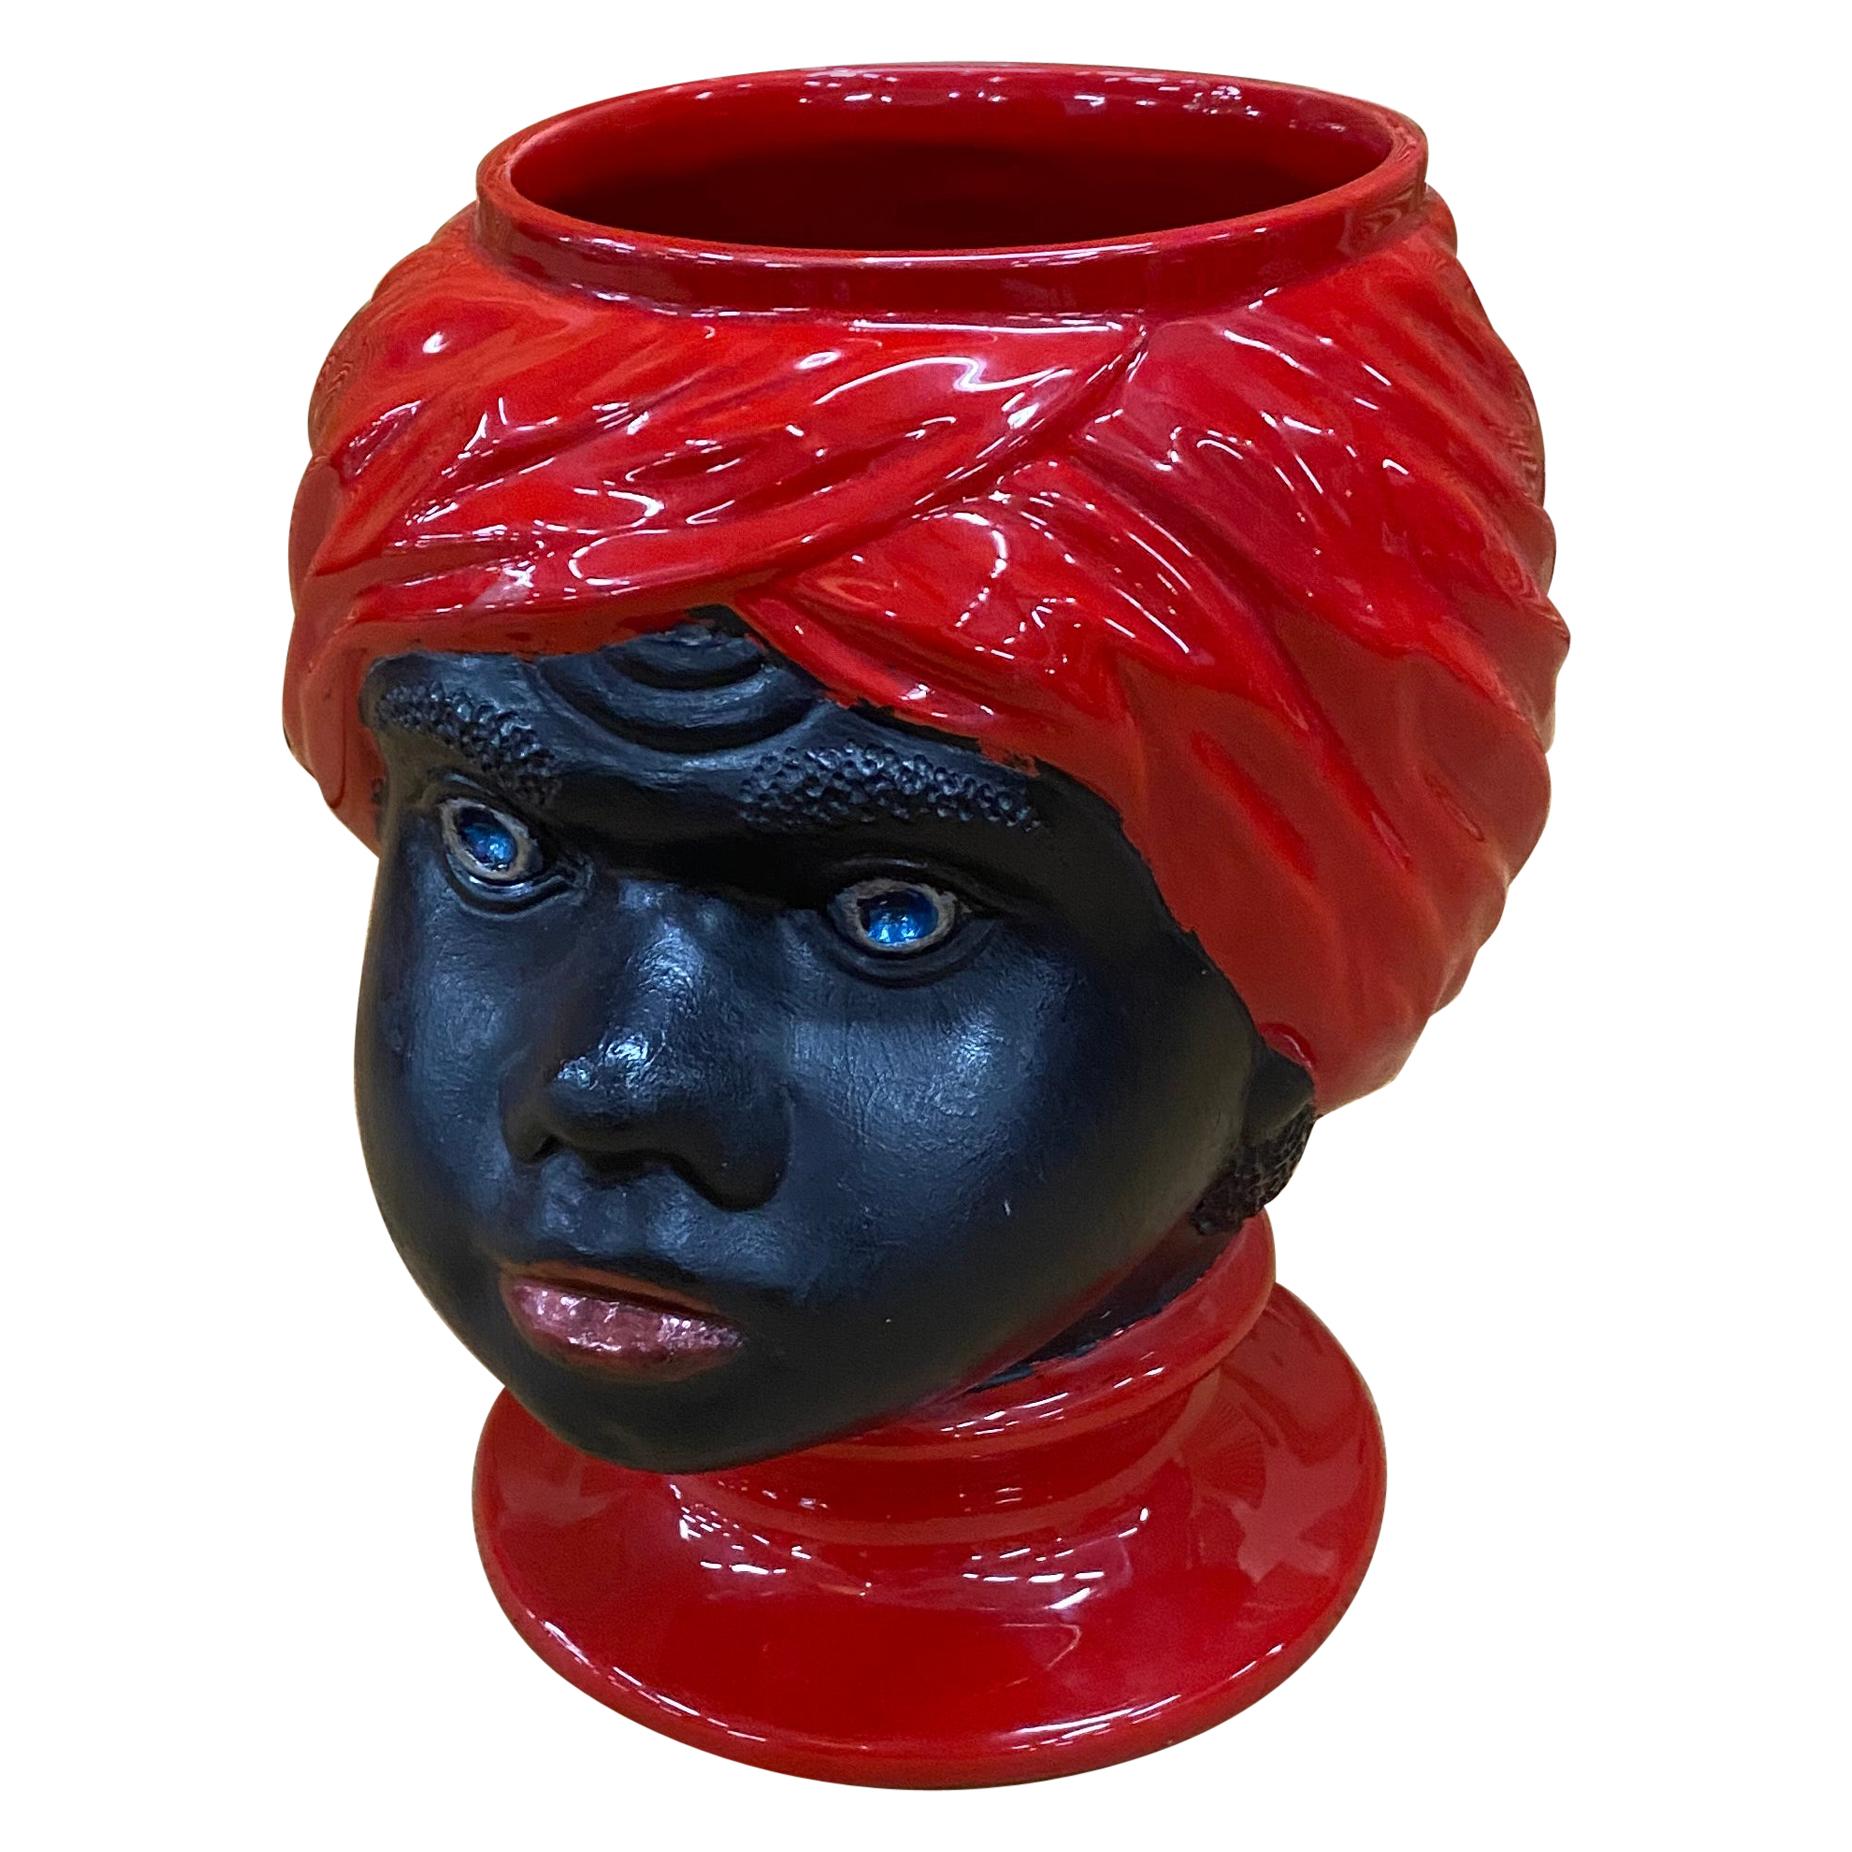 Piero Fornasetti, Ceramic Head Vase, circa 1960